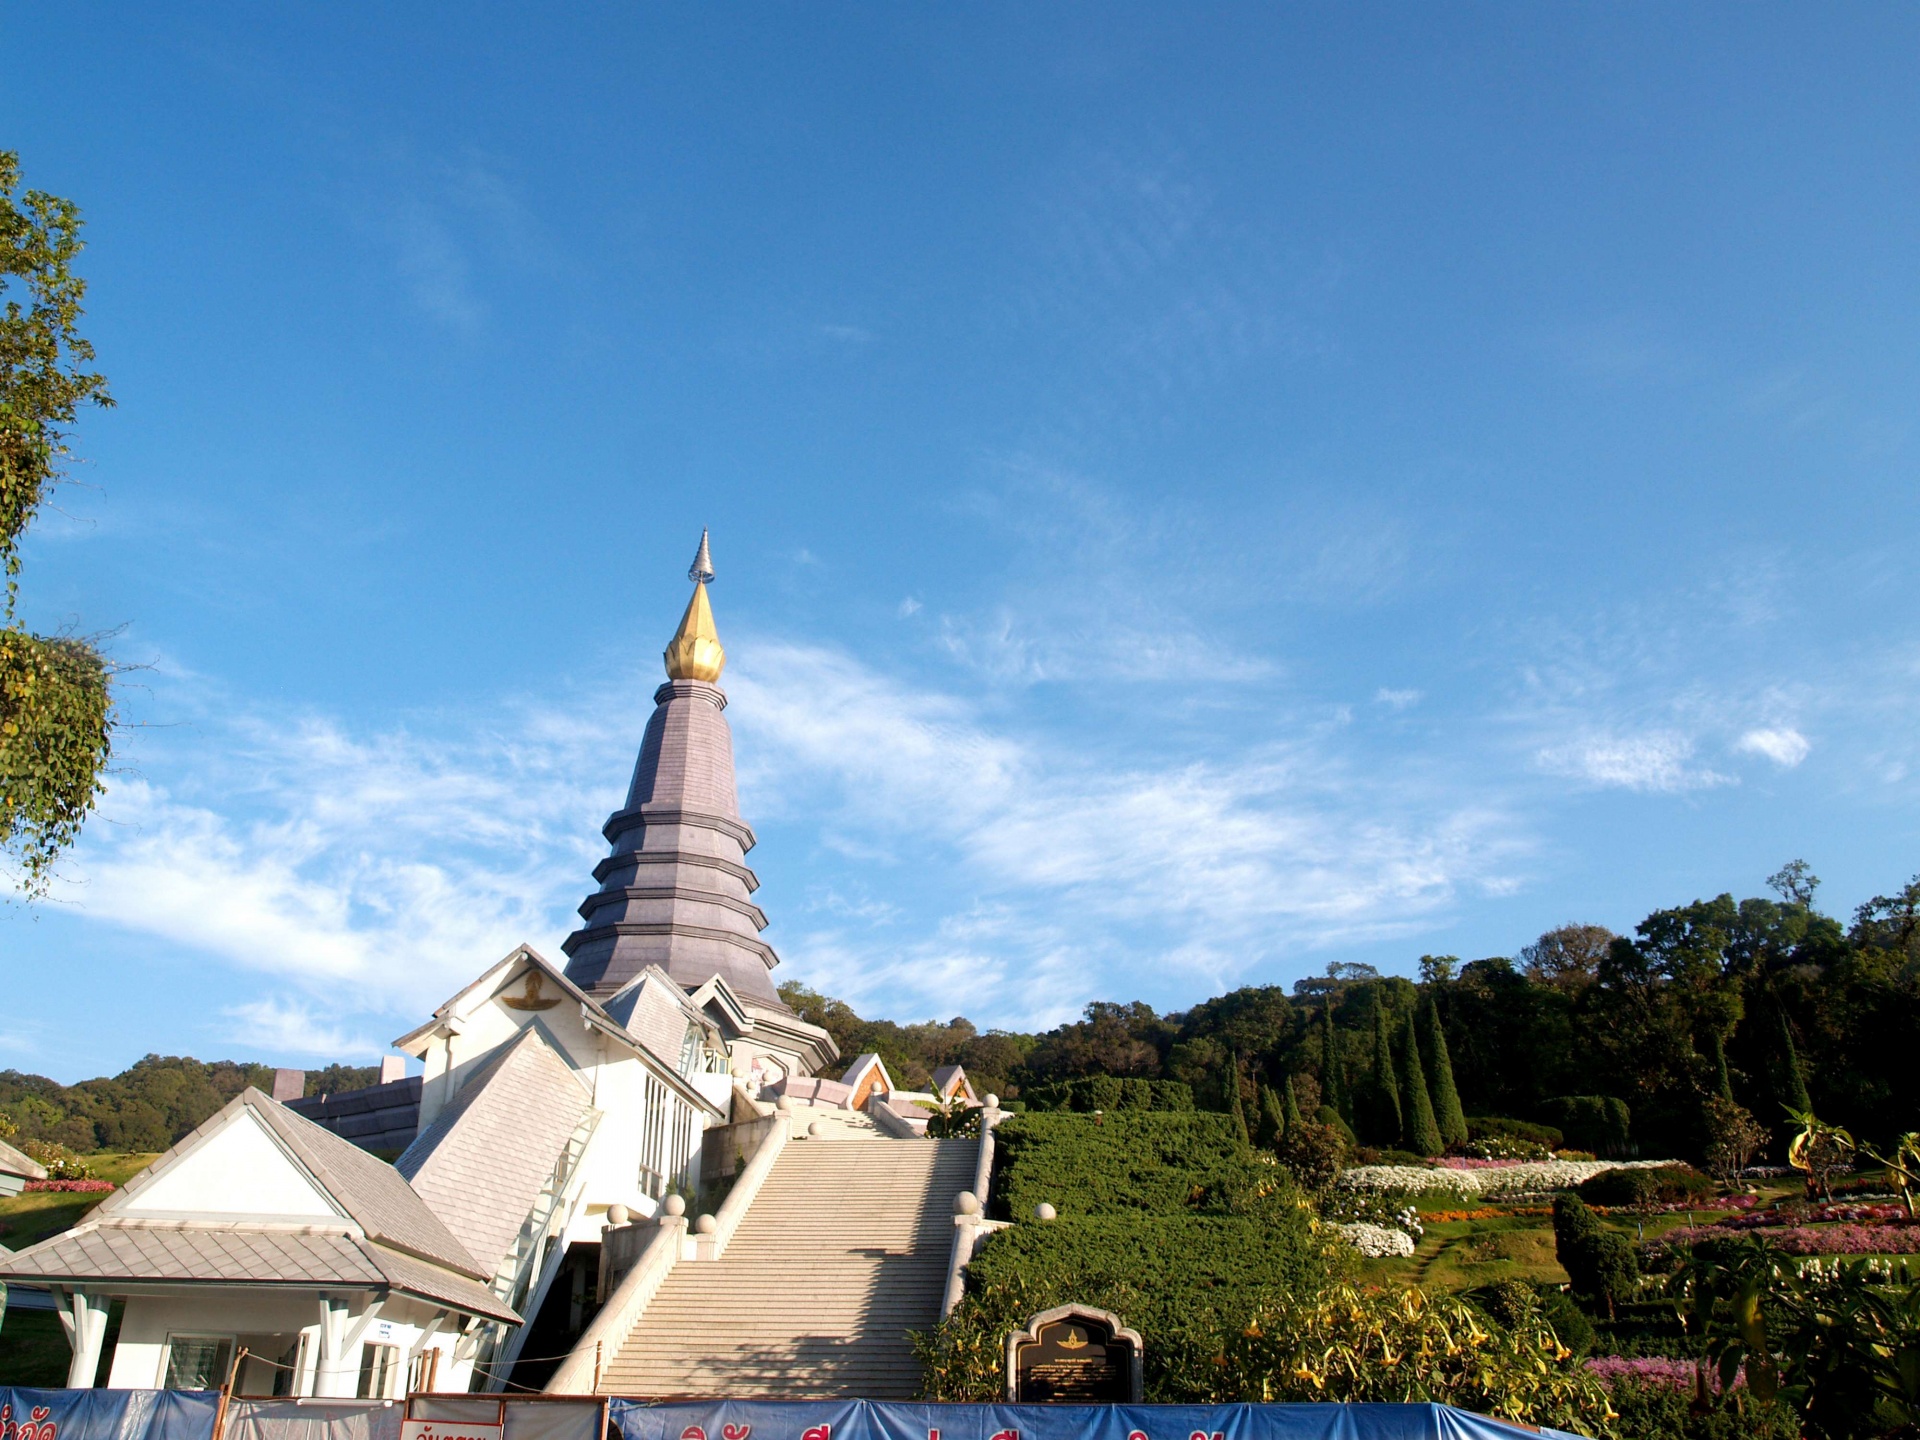 Two Pagodas Doi Inthanon, Chiang Mai